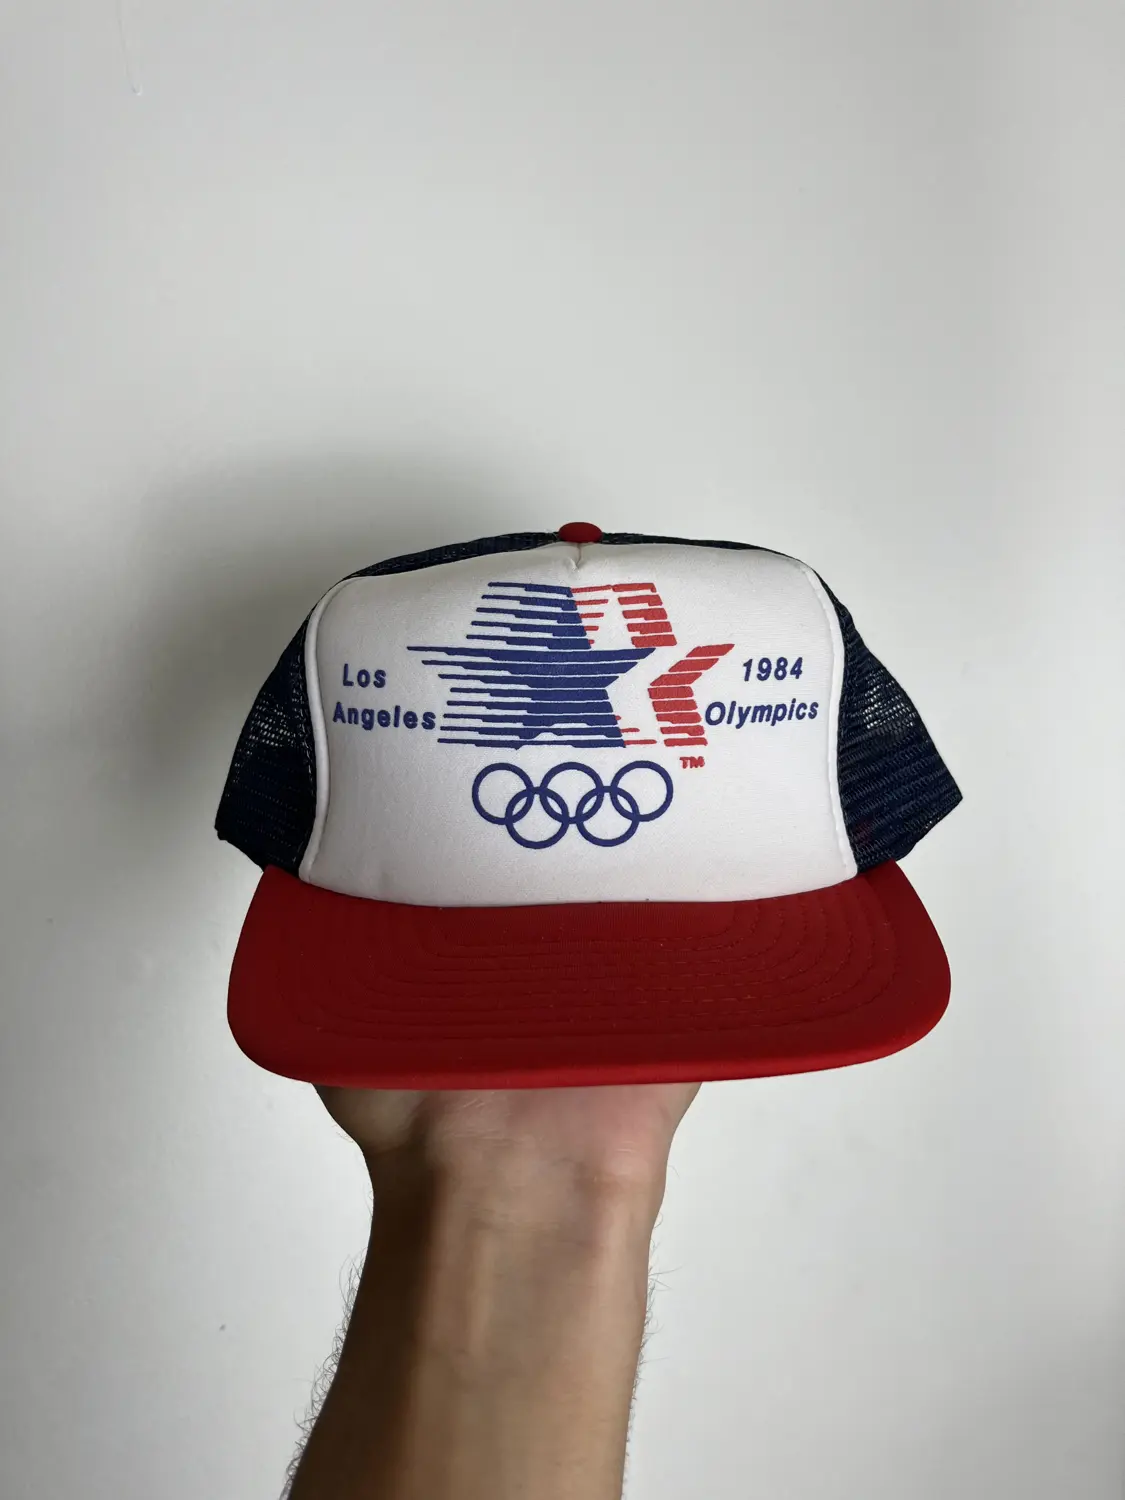 LA 1984 Olympics hat